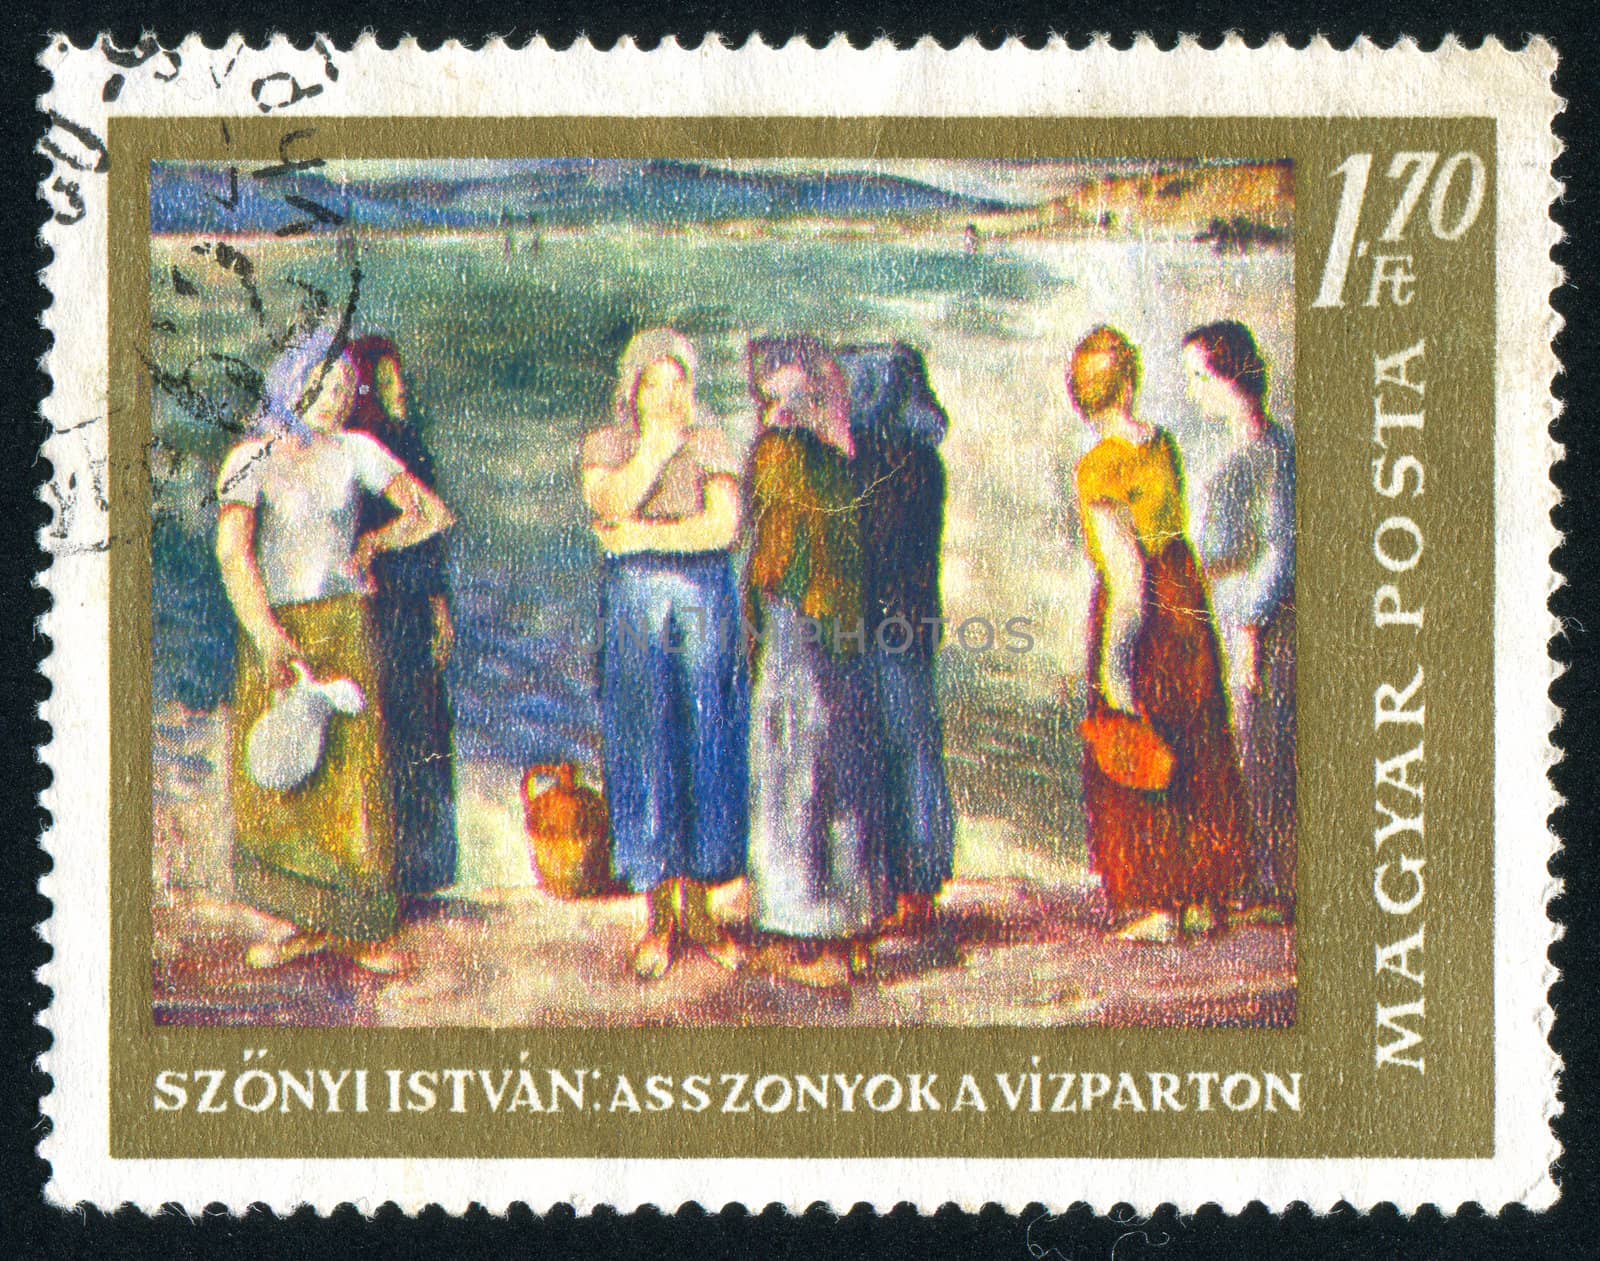 HUNGARY - CIRCA 1967: stamp printed by Hungary, shows Women at the River Bank by Istvan Szonyi, circa 1967